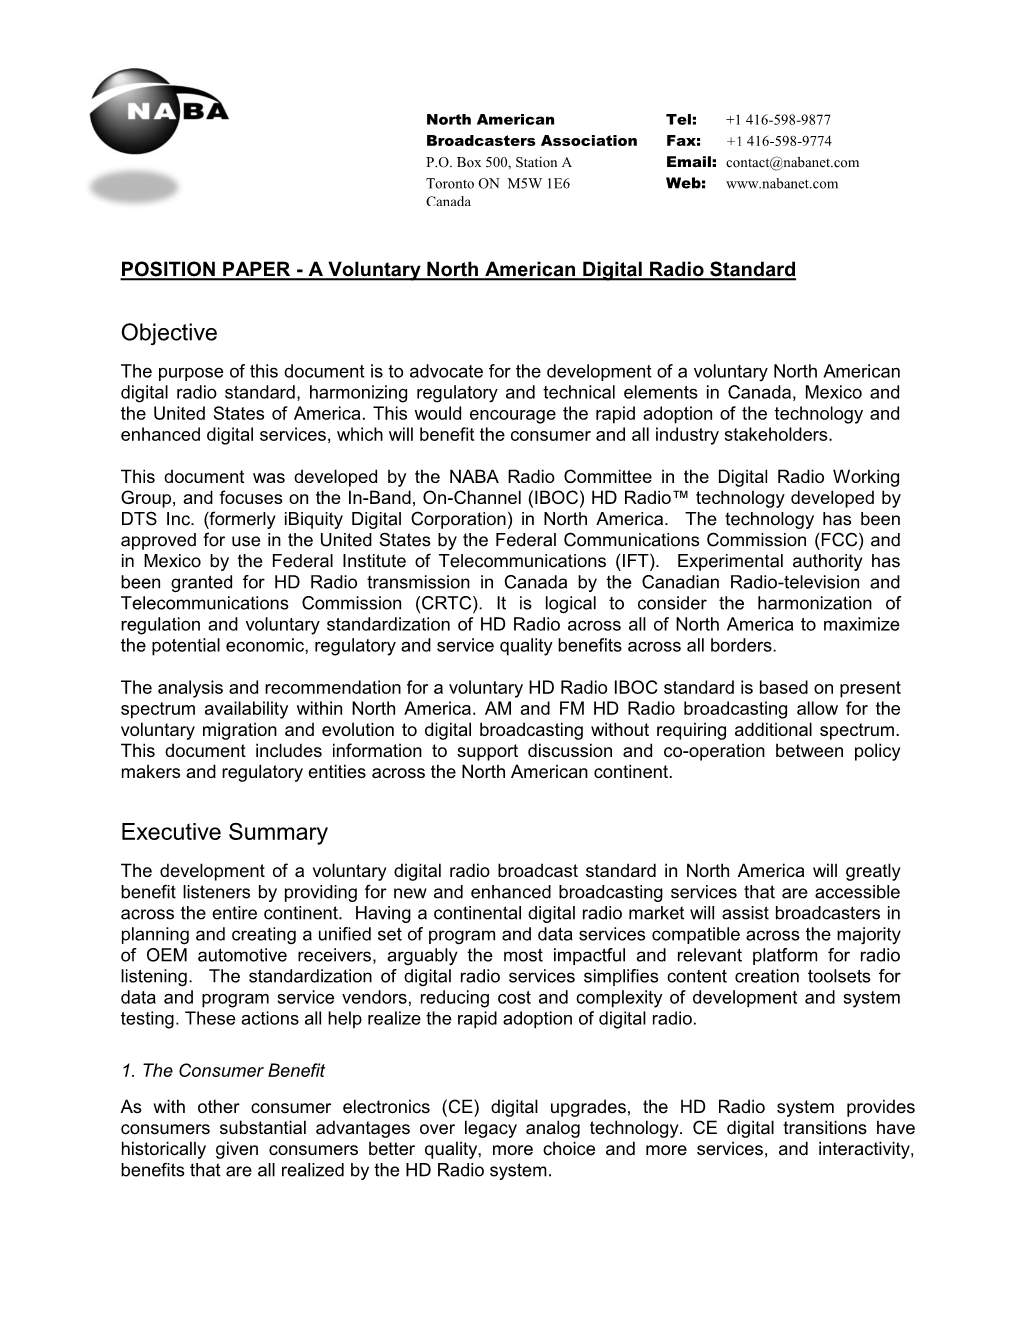 Position Paper on a Voluntary North American Digital Radio Standard